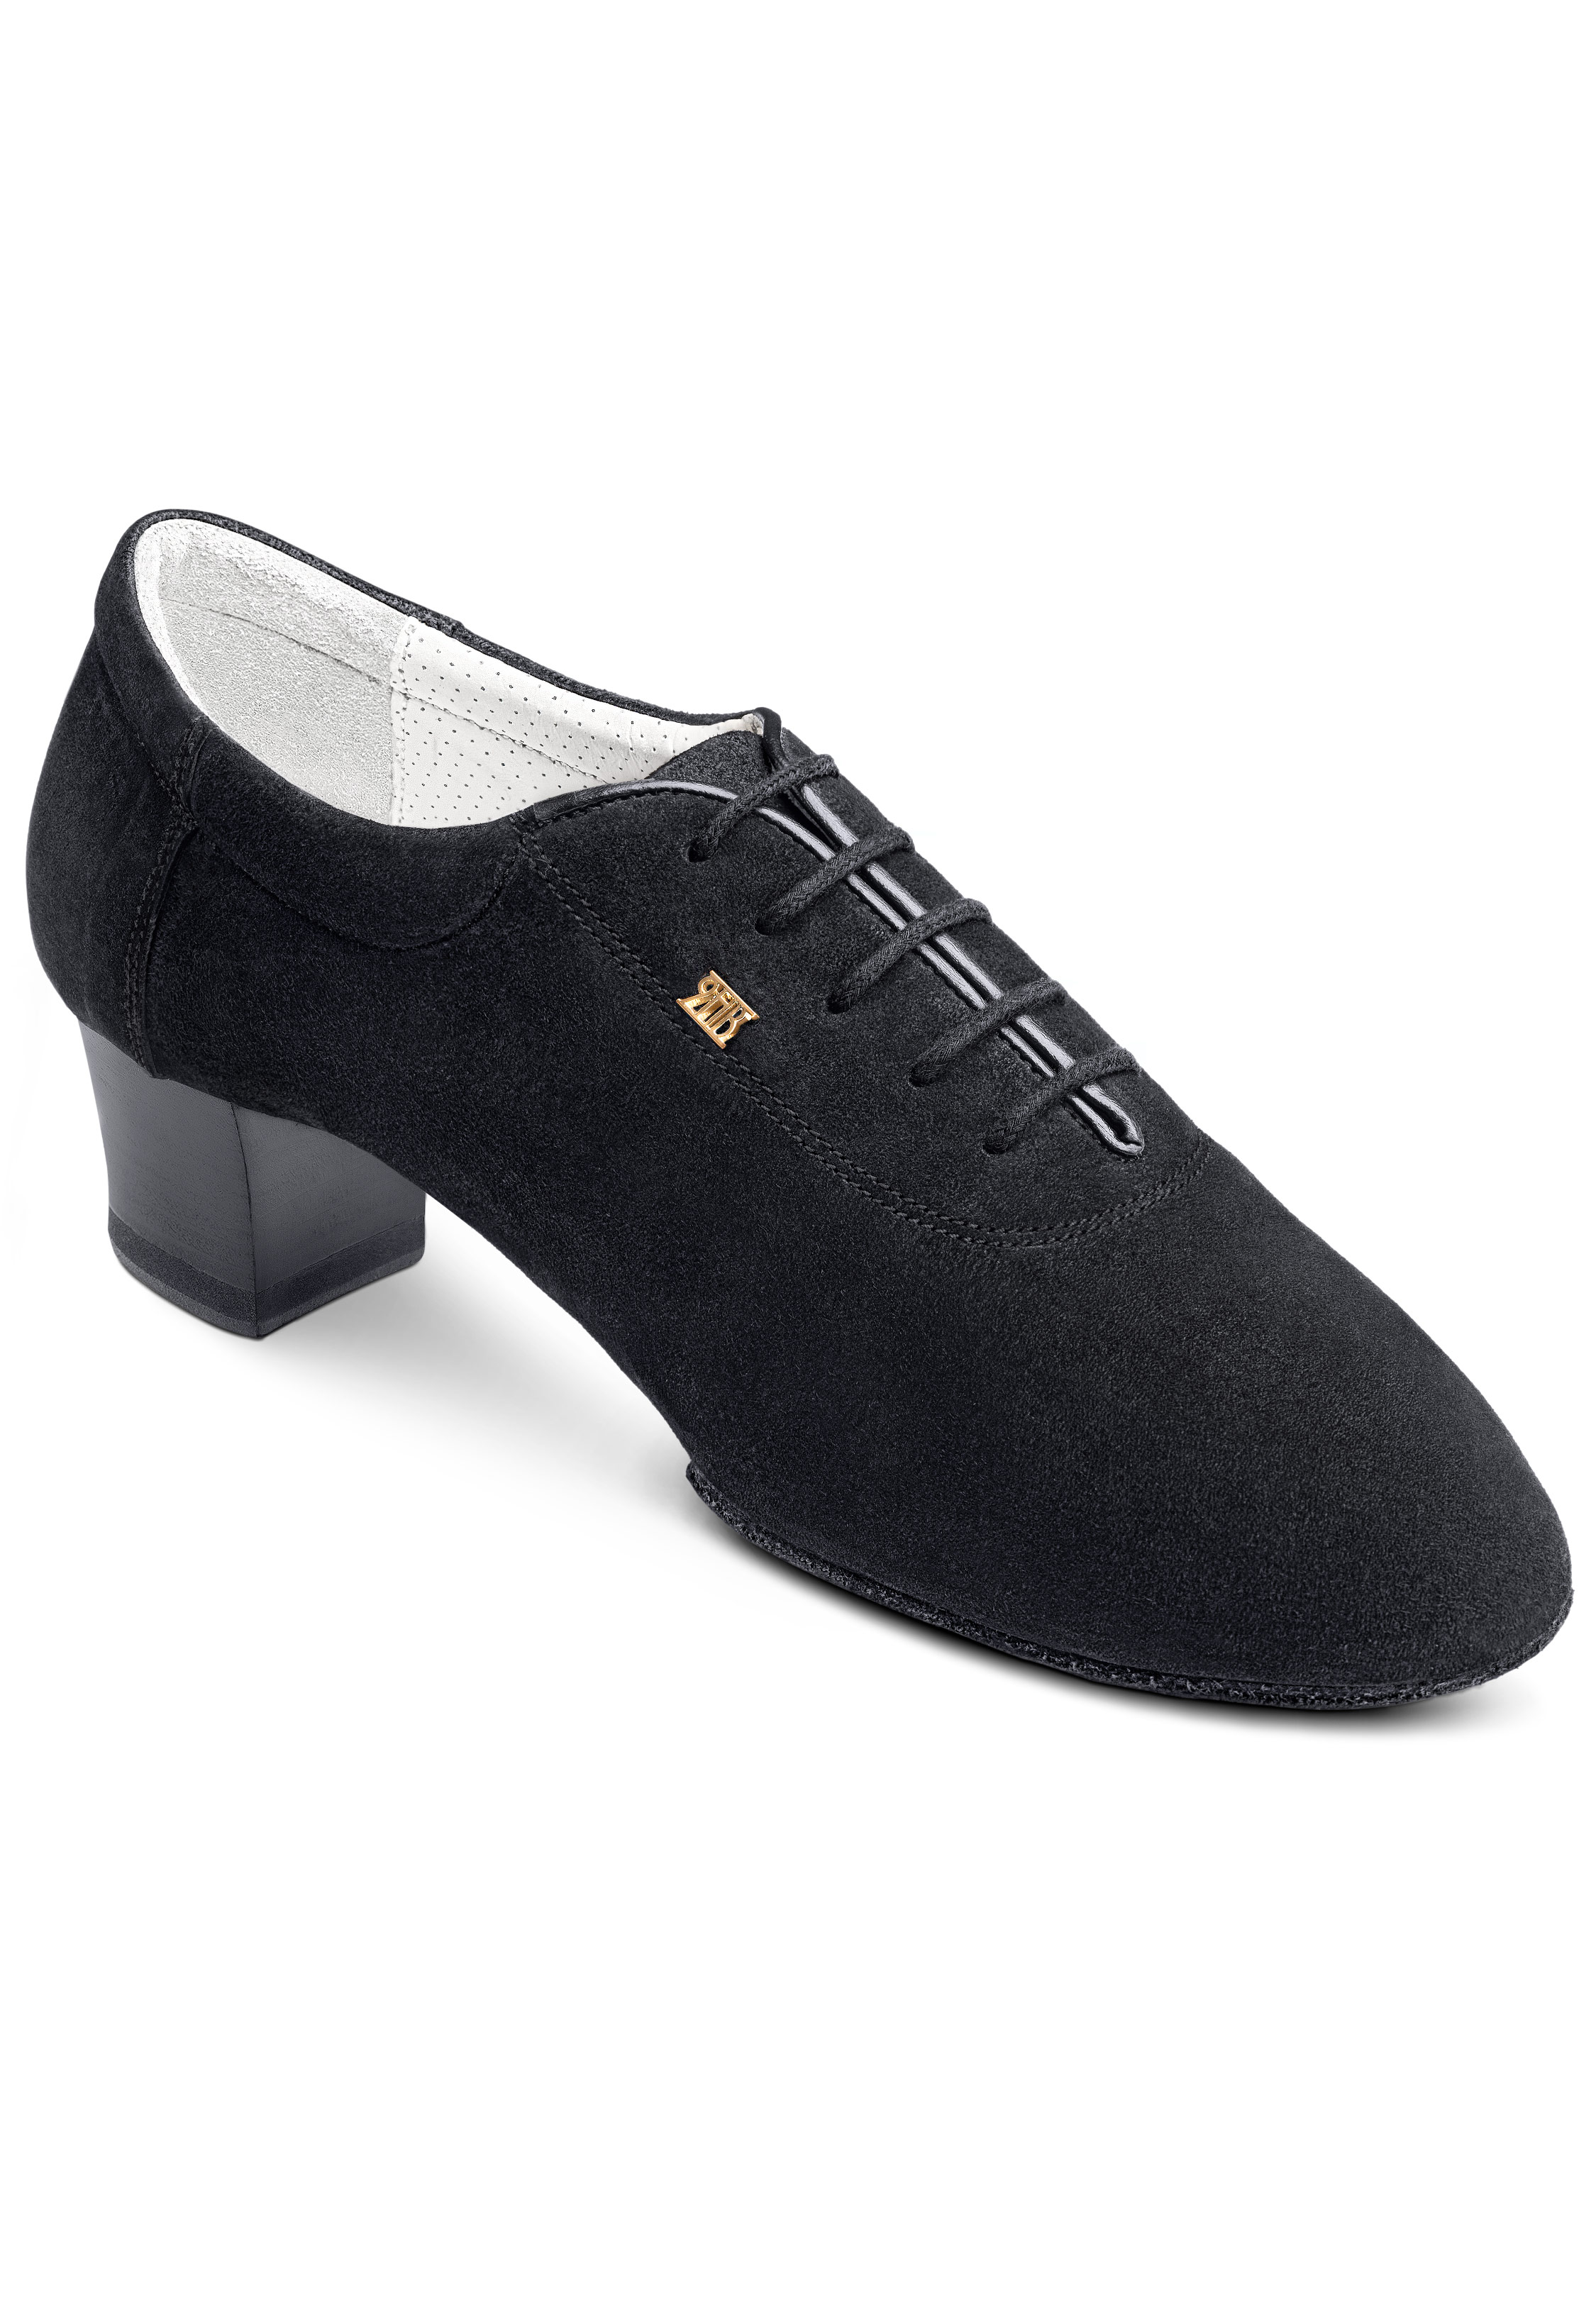 Men Boy Soft-soled Mid Heel Latin Waltz Ballroom Dance Shoes Full Size New N12-2 